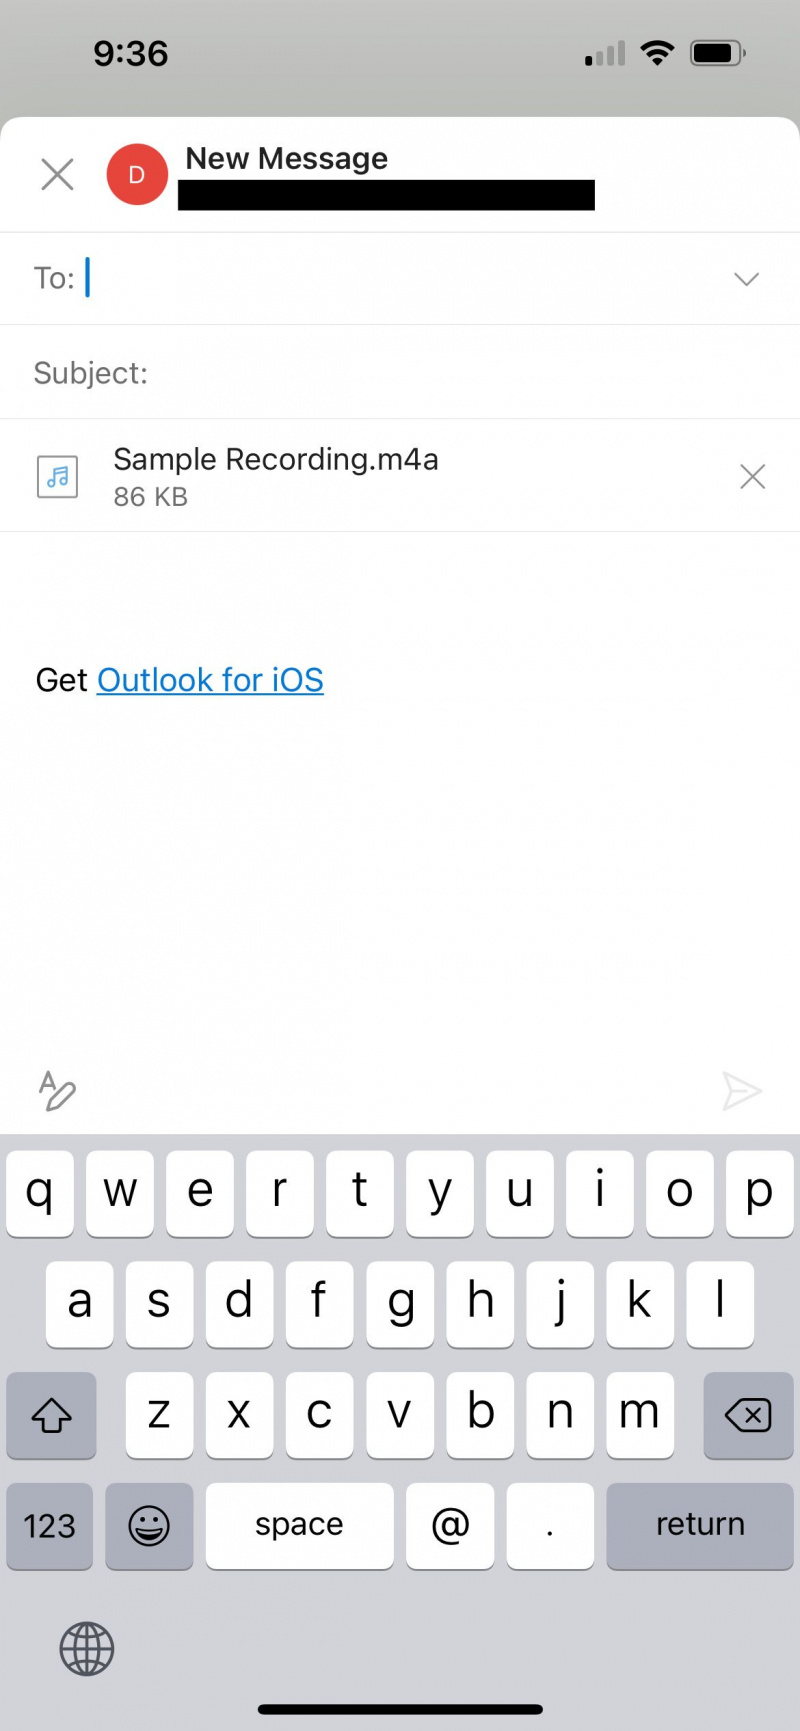   nota de voz de iphone cargada como archivo adjunto de correo electrónico de Outlook